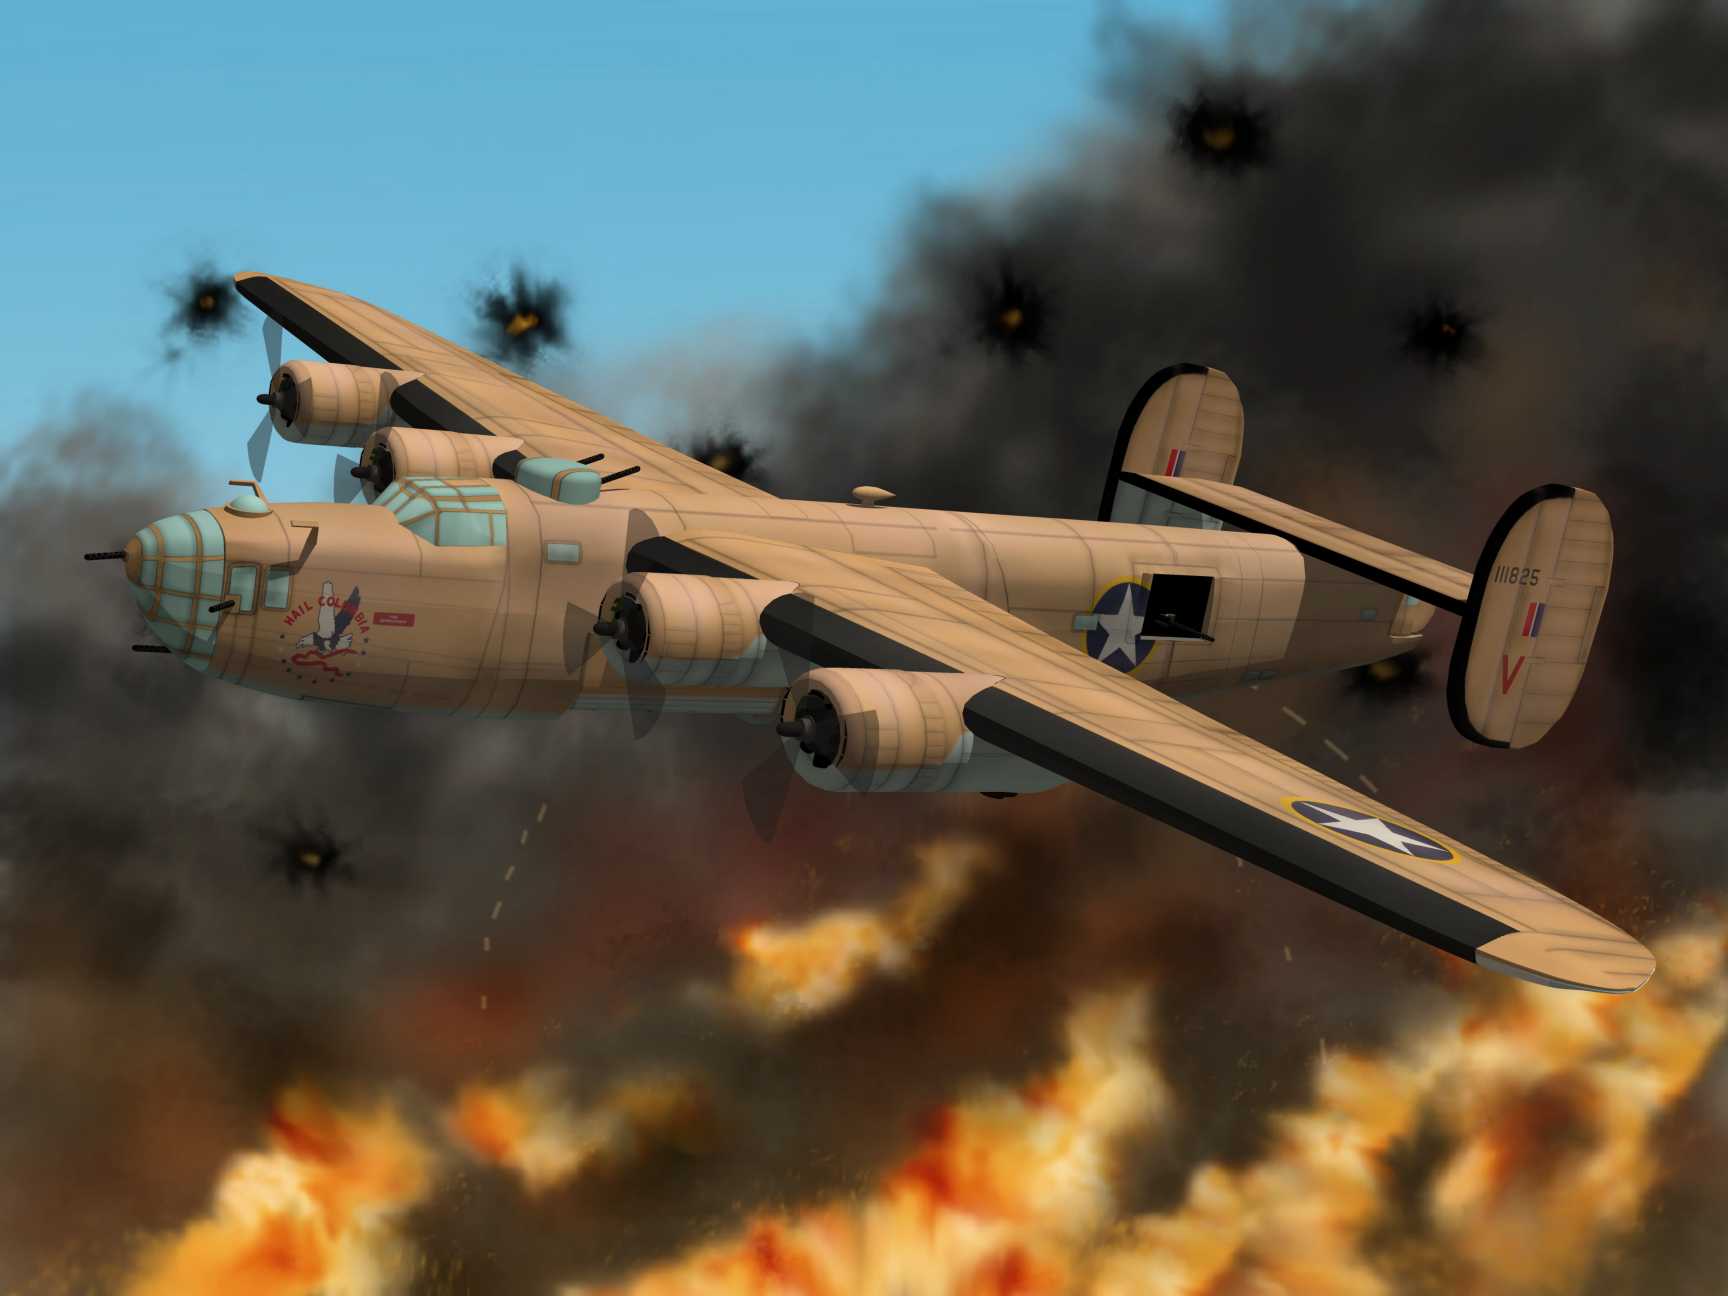 B-24 Liberator "Hail Columbia" over Ploesti